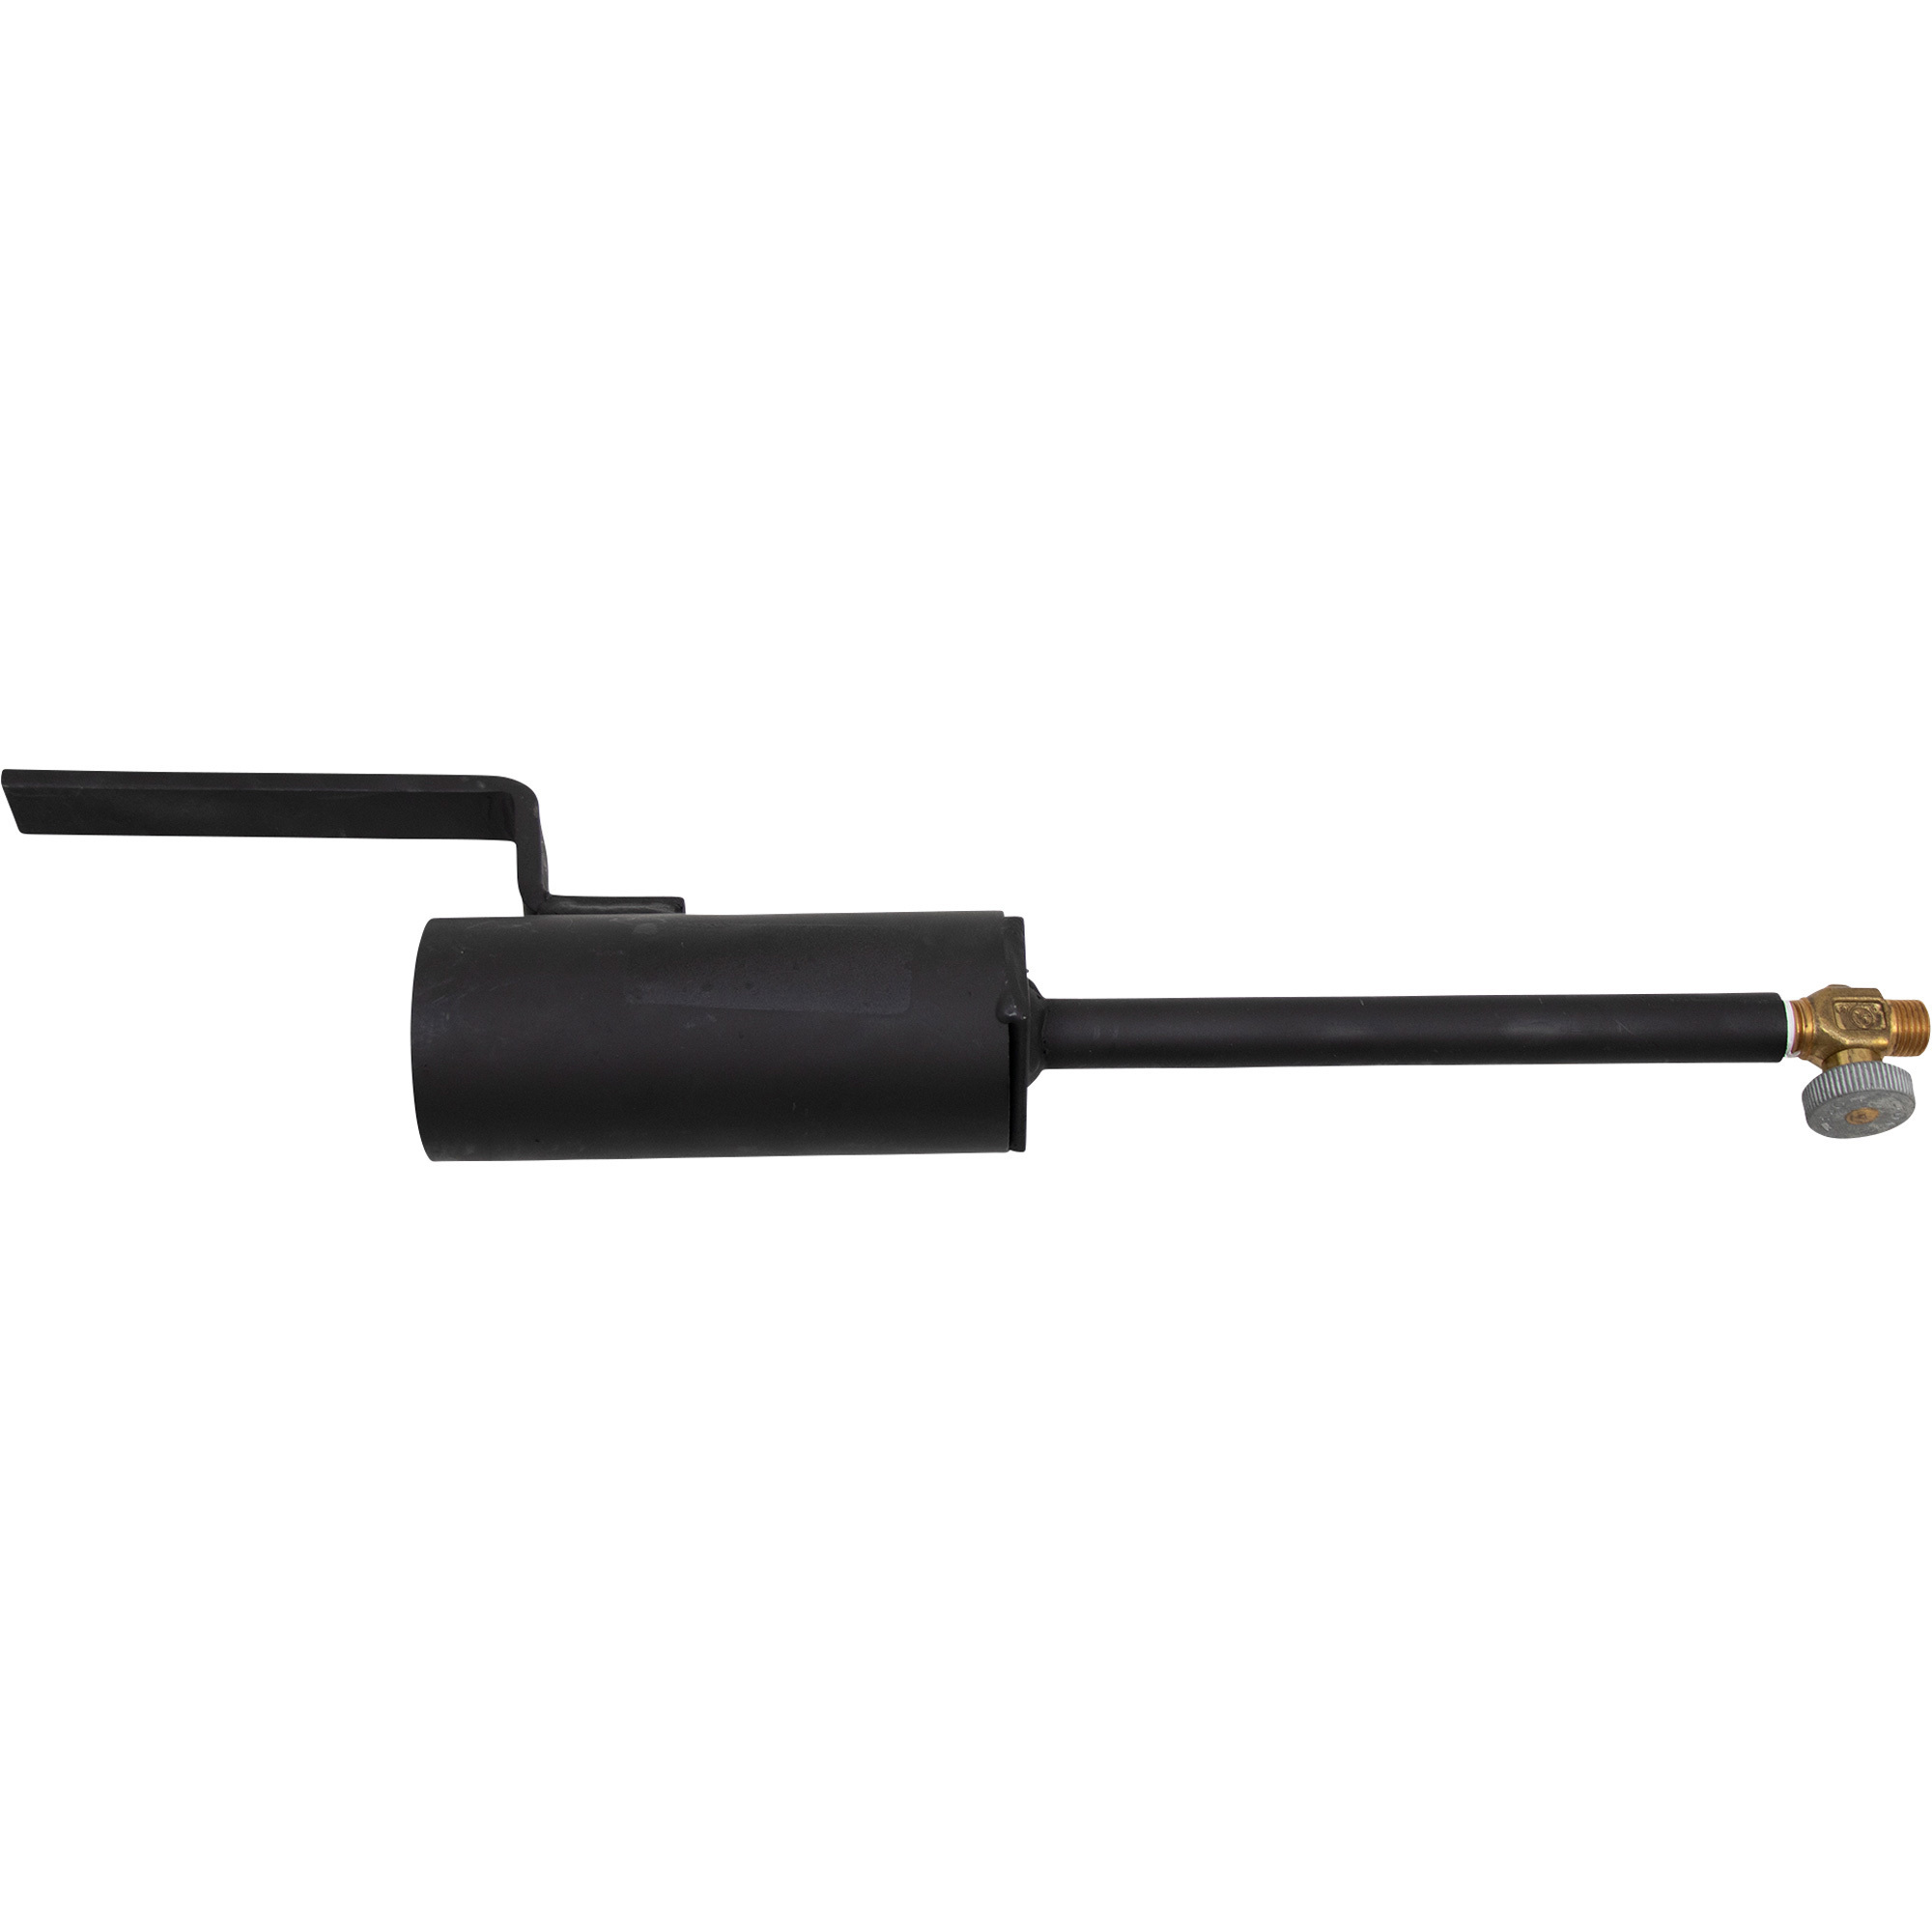 Marshalltown Replacement Torch Head for Portable Asphalt Melter/Applicator #61770, Model RED704982